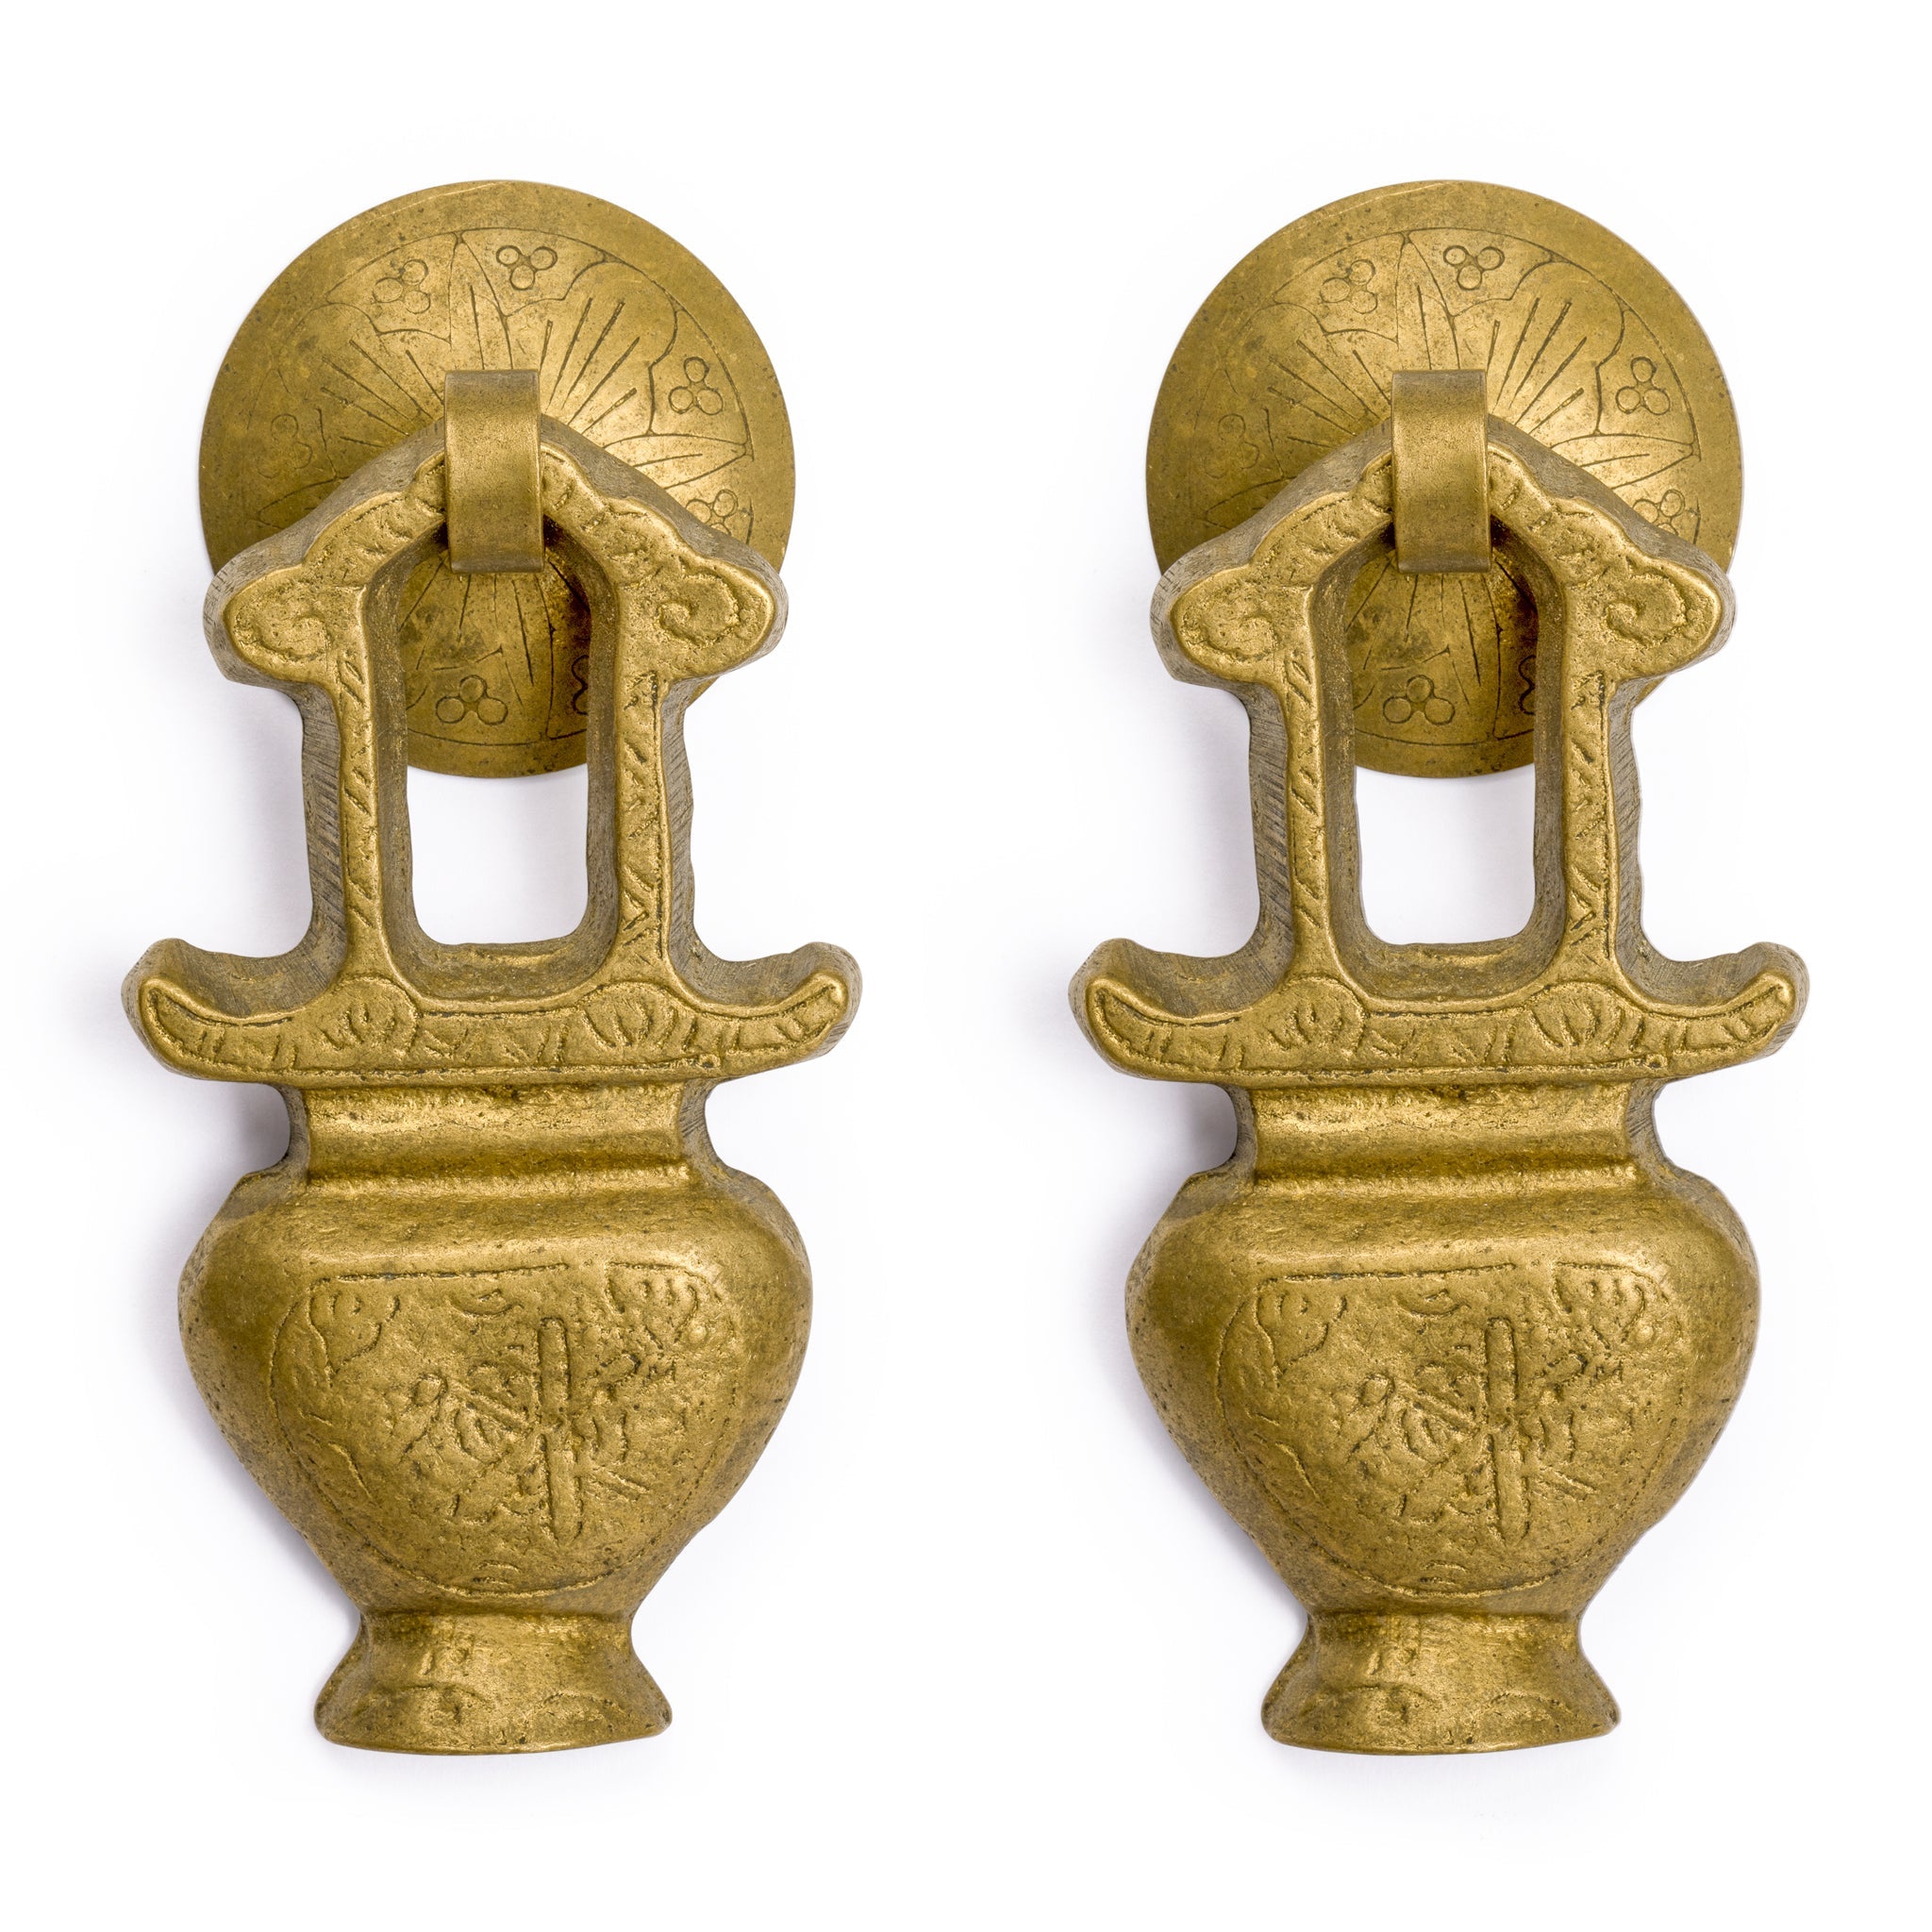 Golden Furnace Pulls 3" - Set of 2-Chinese Brass Hardware